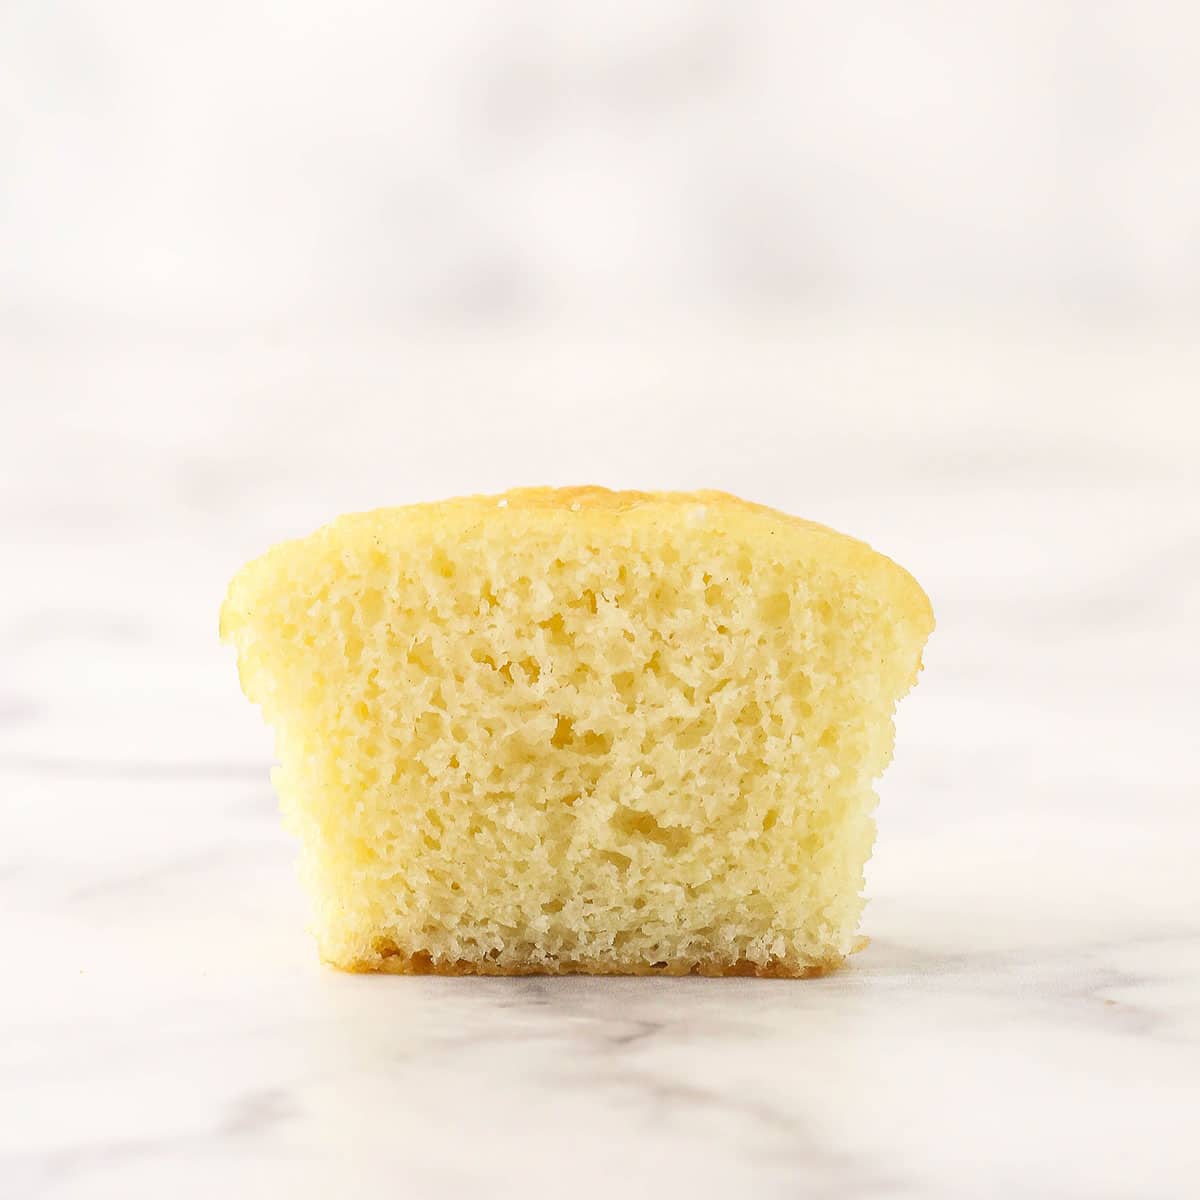 A moist vanilla cupcake cut in half to reveal its interior